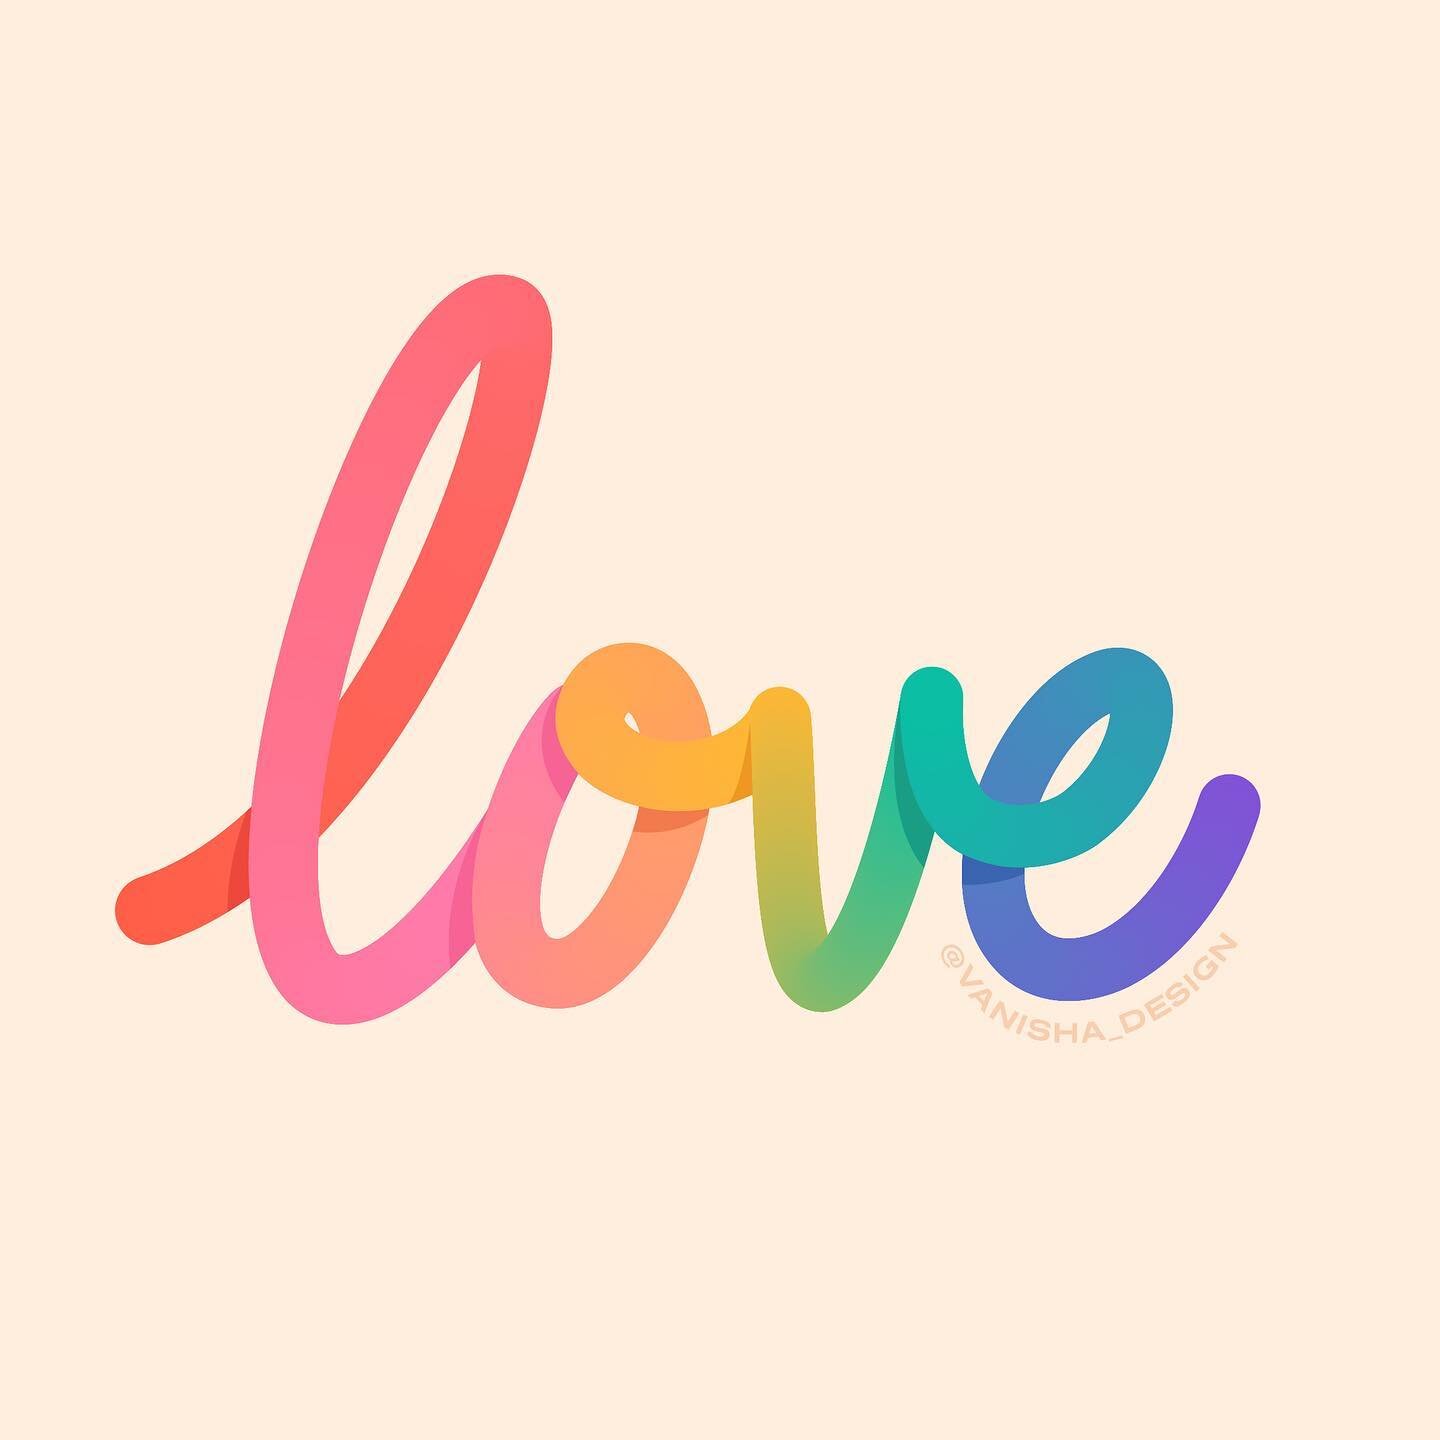 ❤️🧡💛💚💙💜
.
.
.
#love #pridemonth #pride #pride2021 #lgbtqart #typedesign #typography #cwcpridechallenge #creativewomencommunity #rainbow #june #typeinspiration #designer #adobe #womenoftype #thedailytype #digitalart @creativewomencommunity #digit